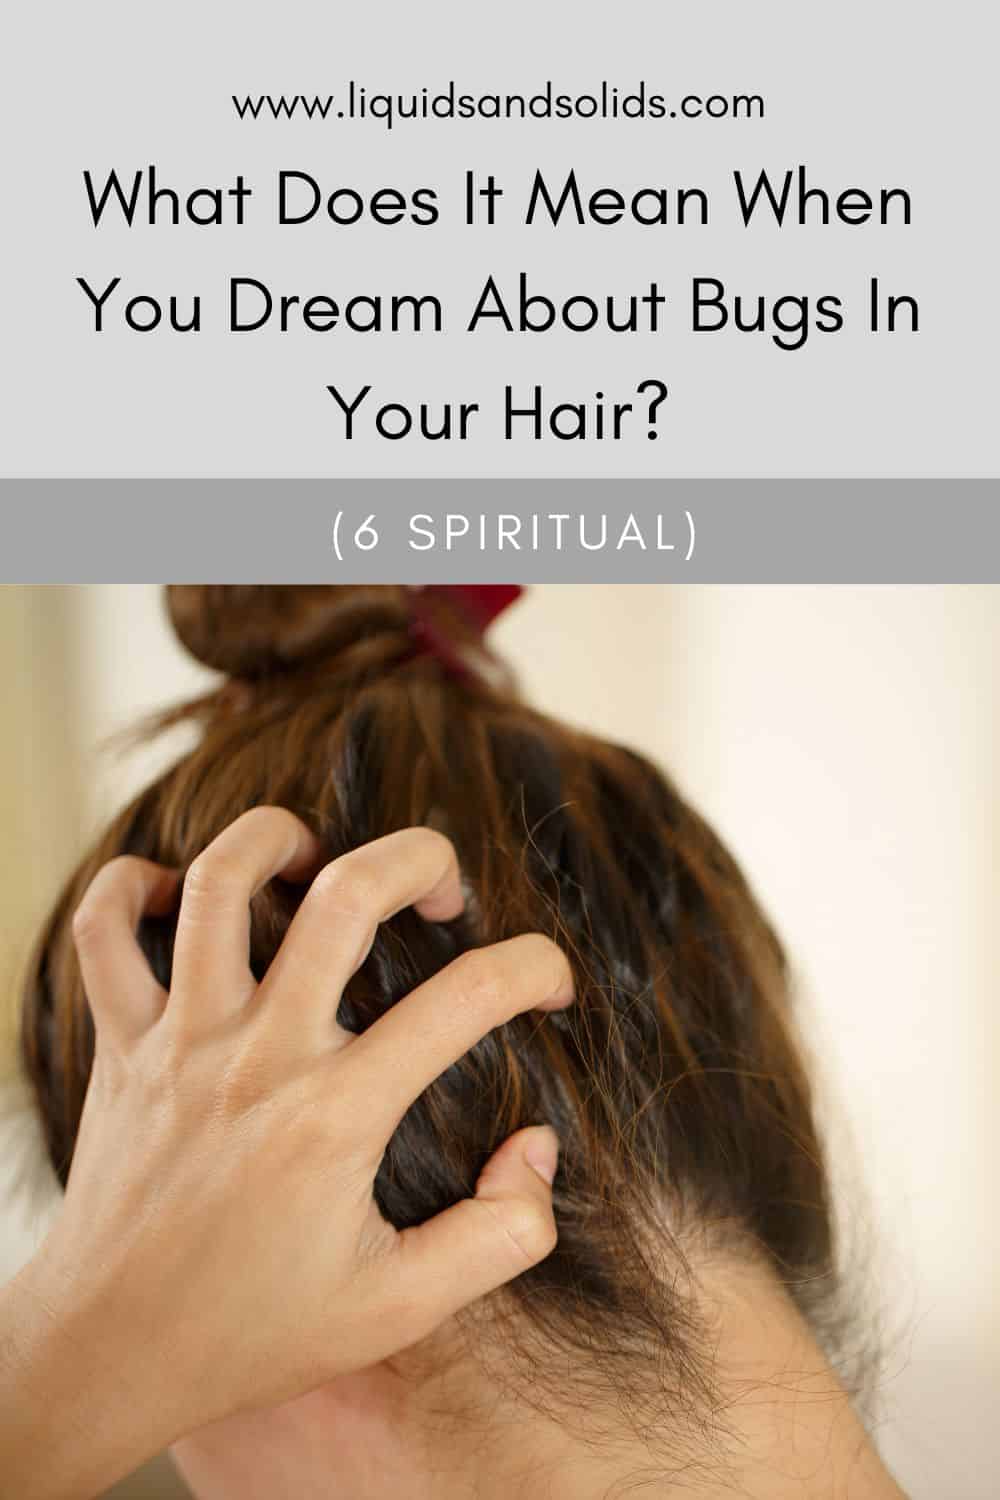  Bugs In Hair Dream (6 spirituális jelentés)